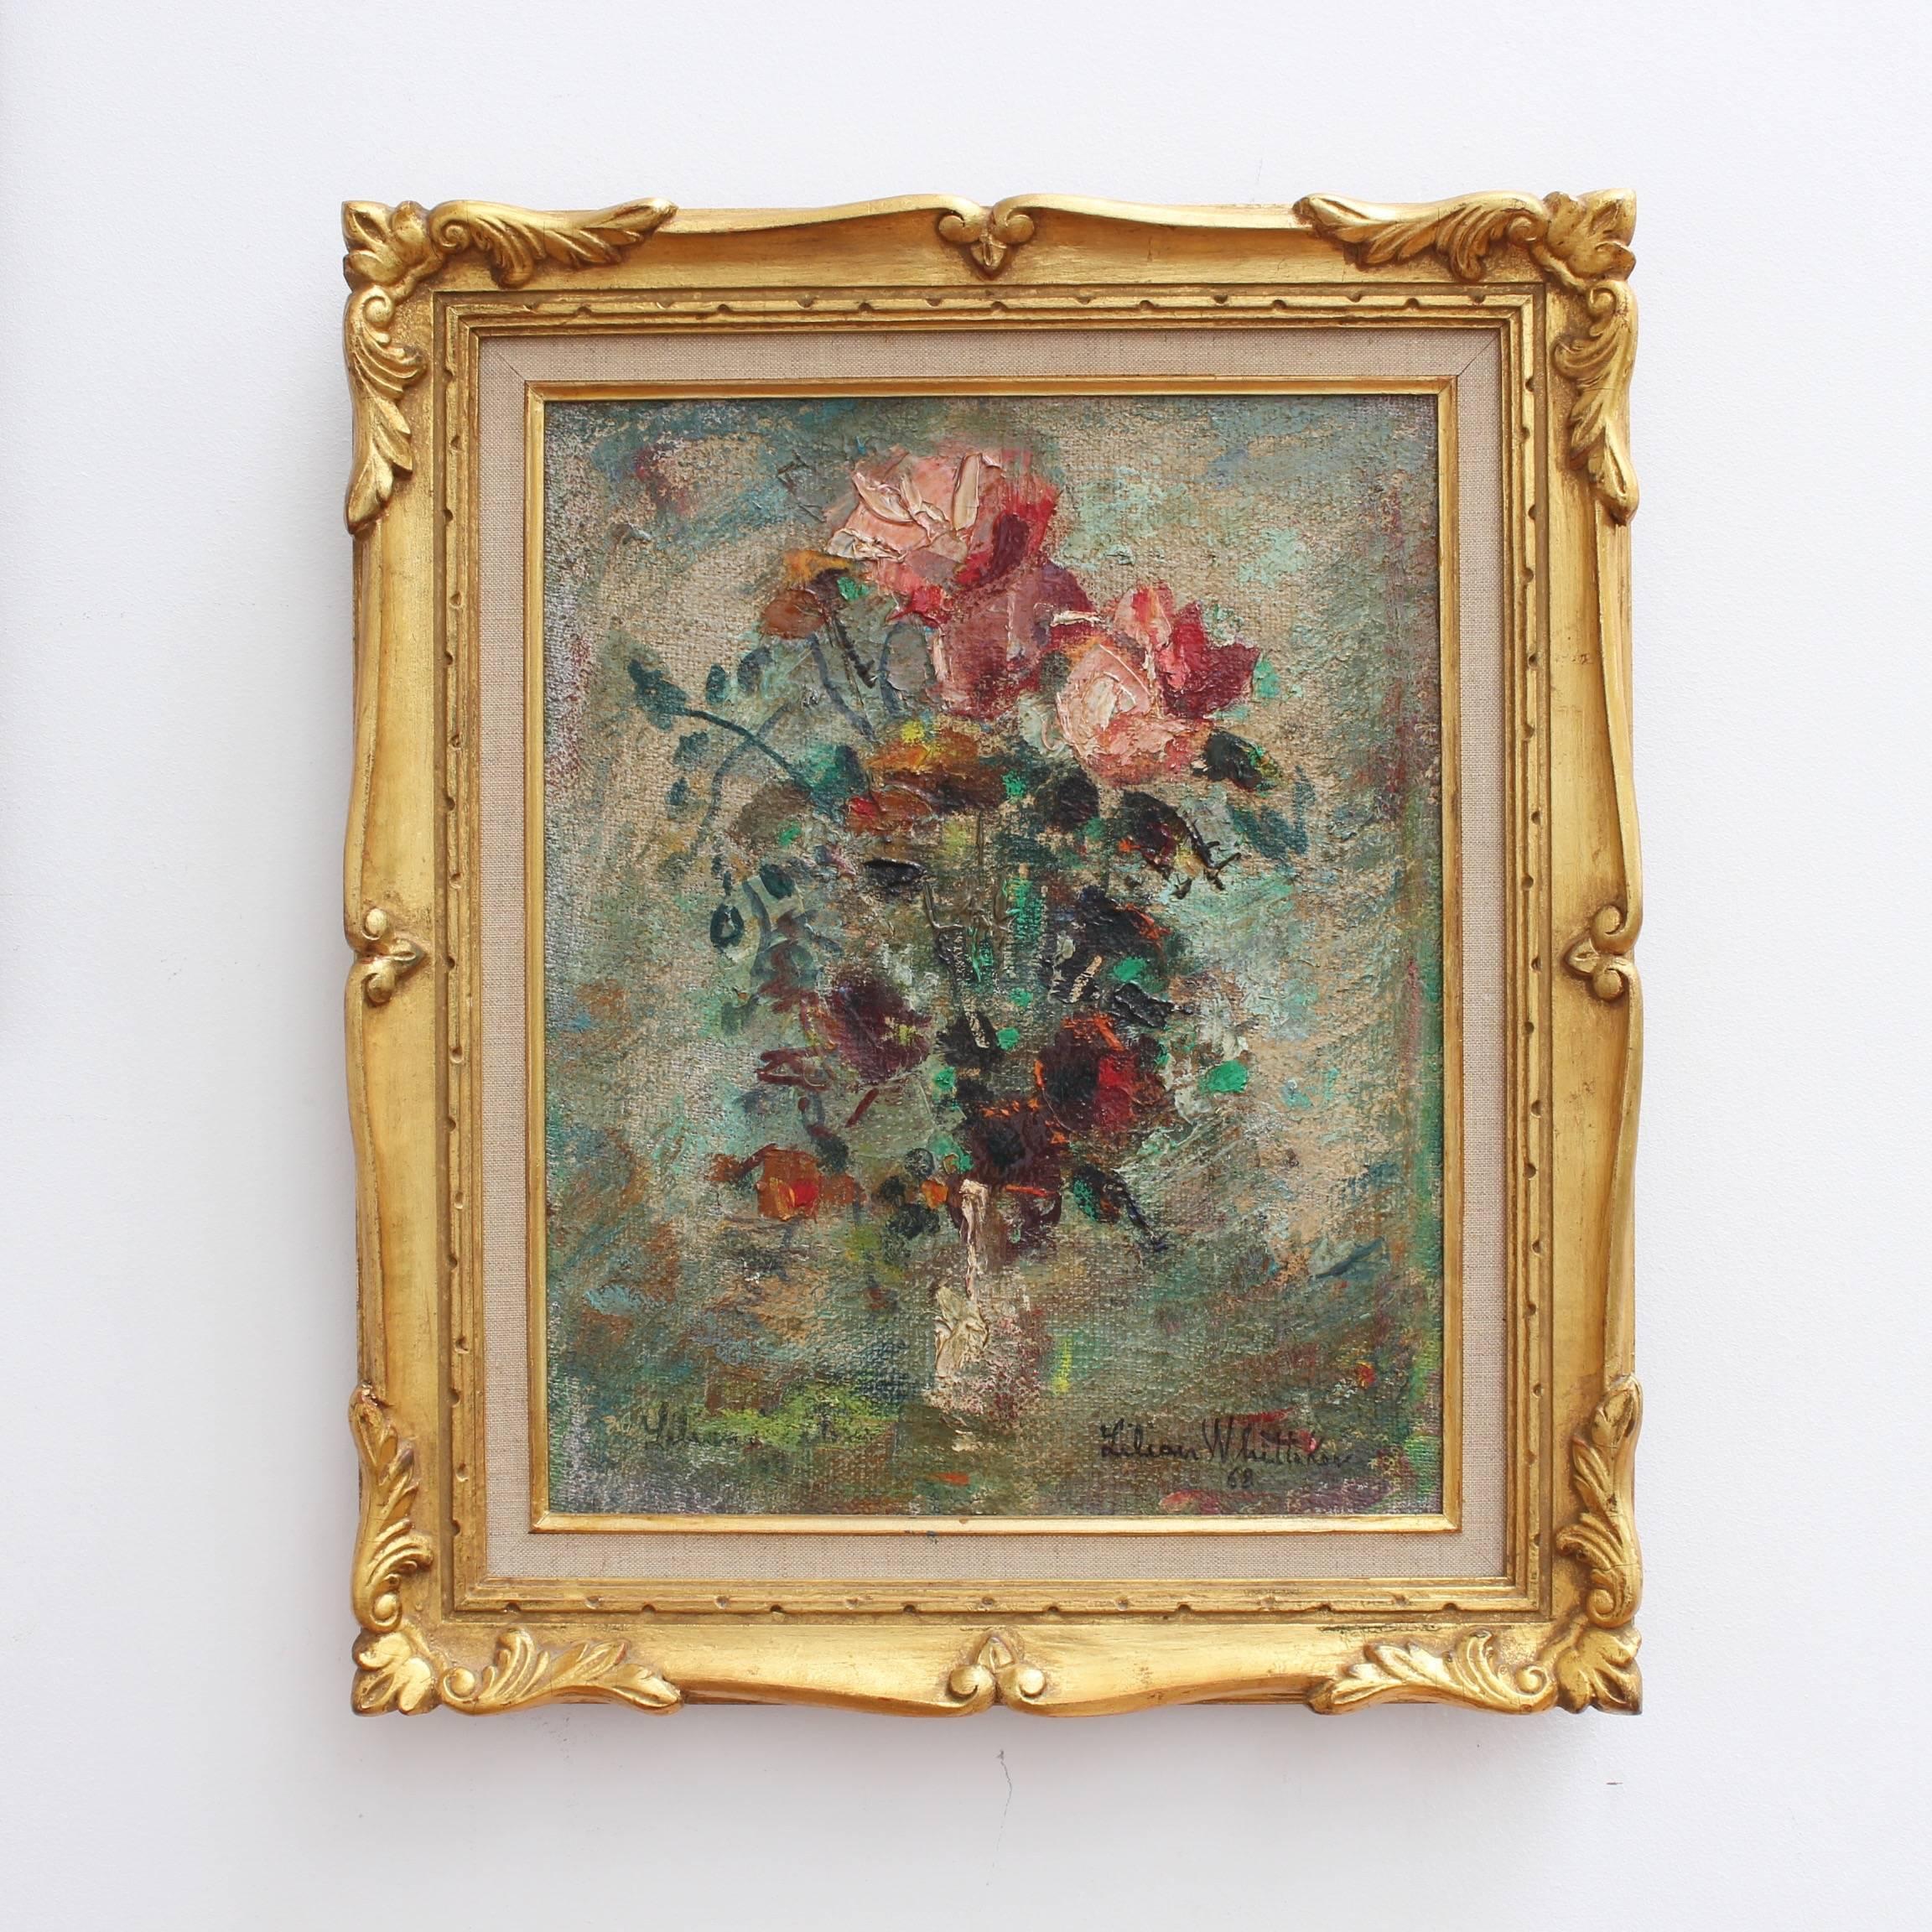 Flower Arrangement in Vase - Painting by Lilian E. Whitteker